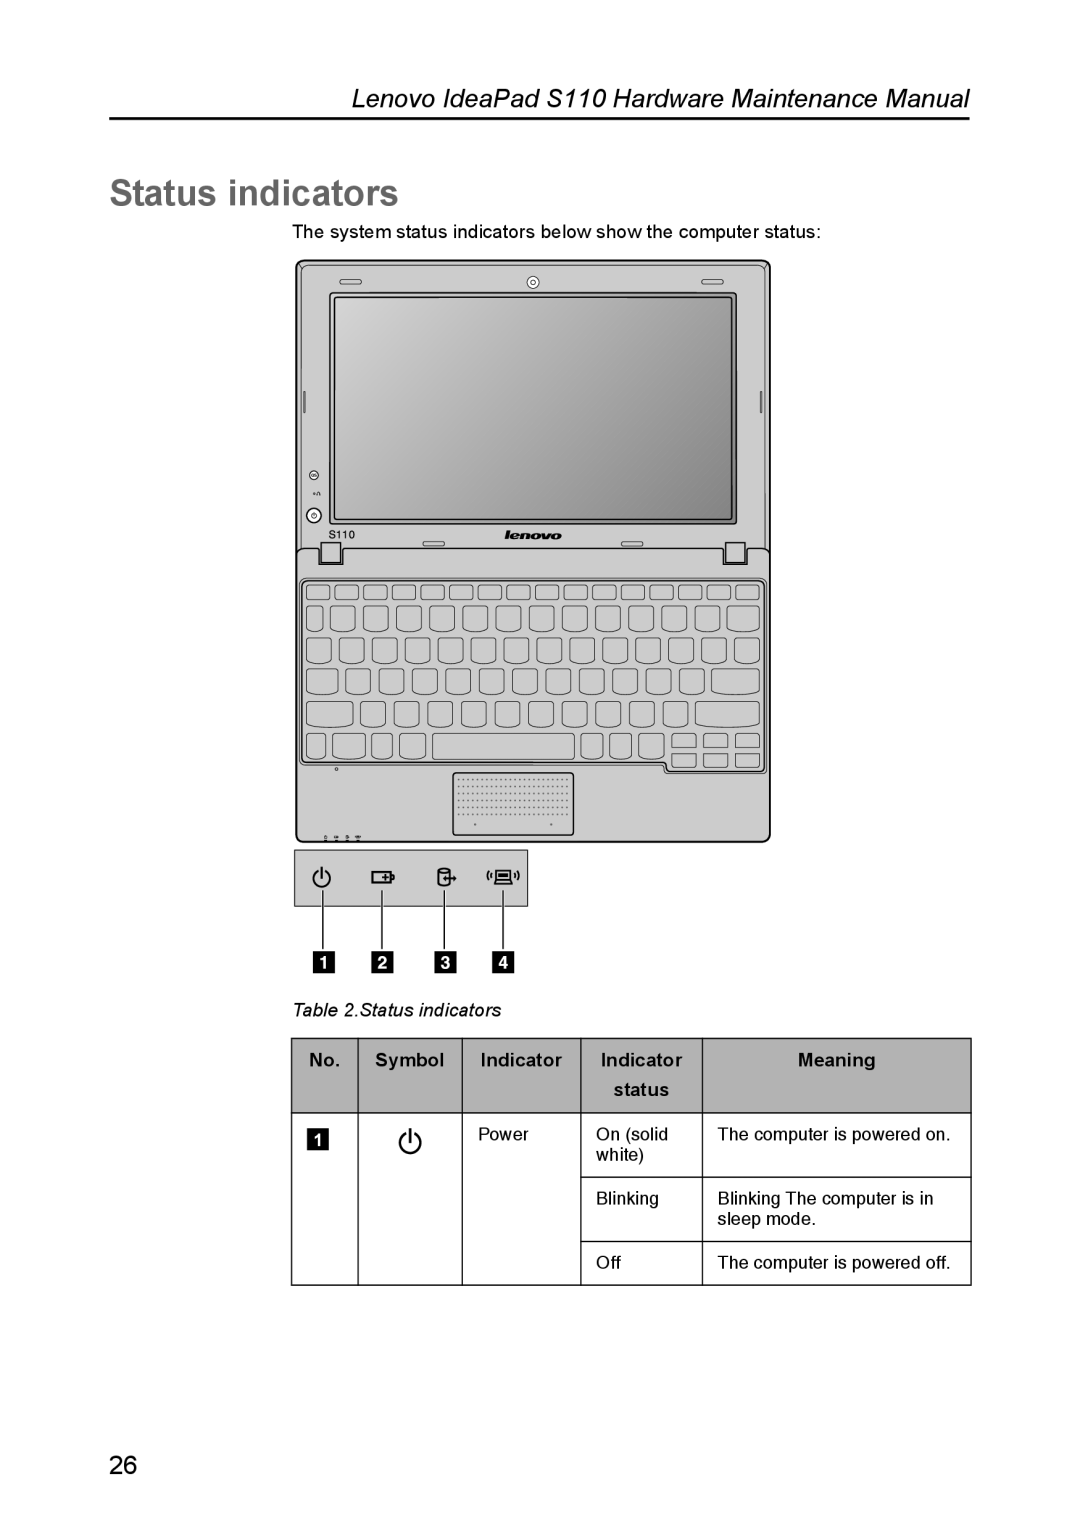 Lenovo manual Status indicators, Symbol, Indicator, Meaning, status, Lenovo IdeaPad S110 Hardware Maintenance Manual 